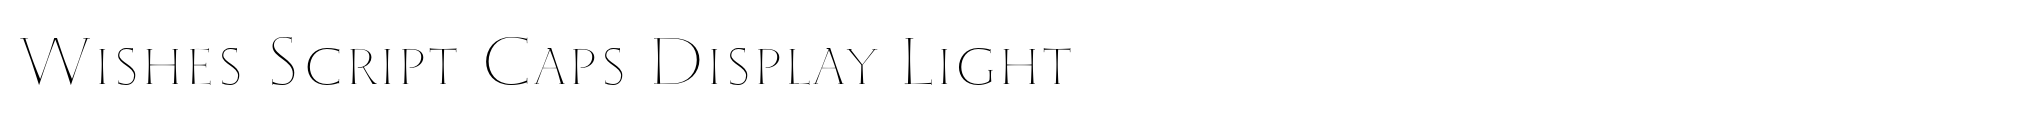 Wishes Script Caps Display Light image